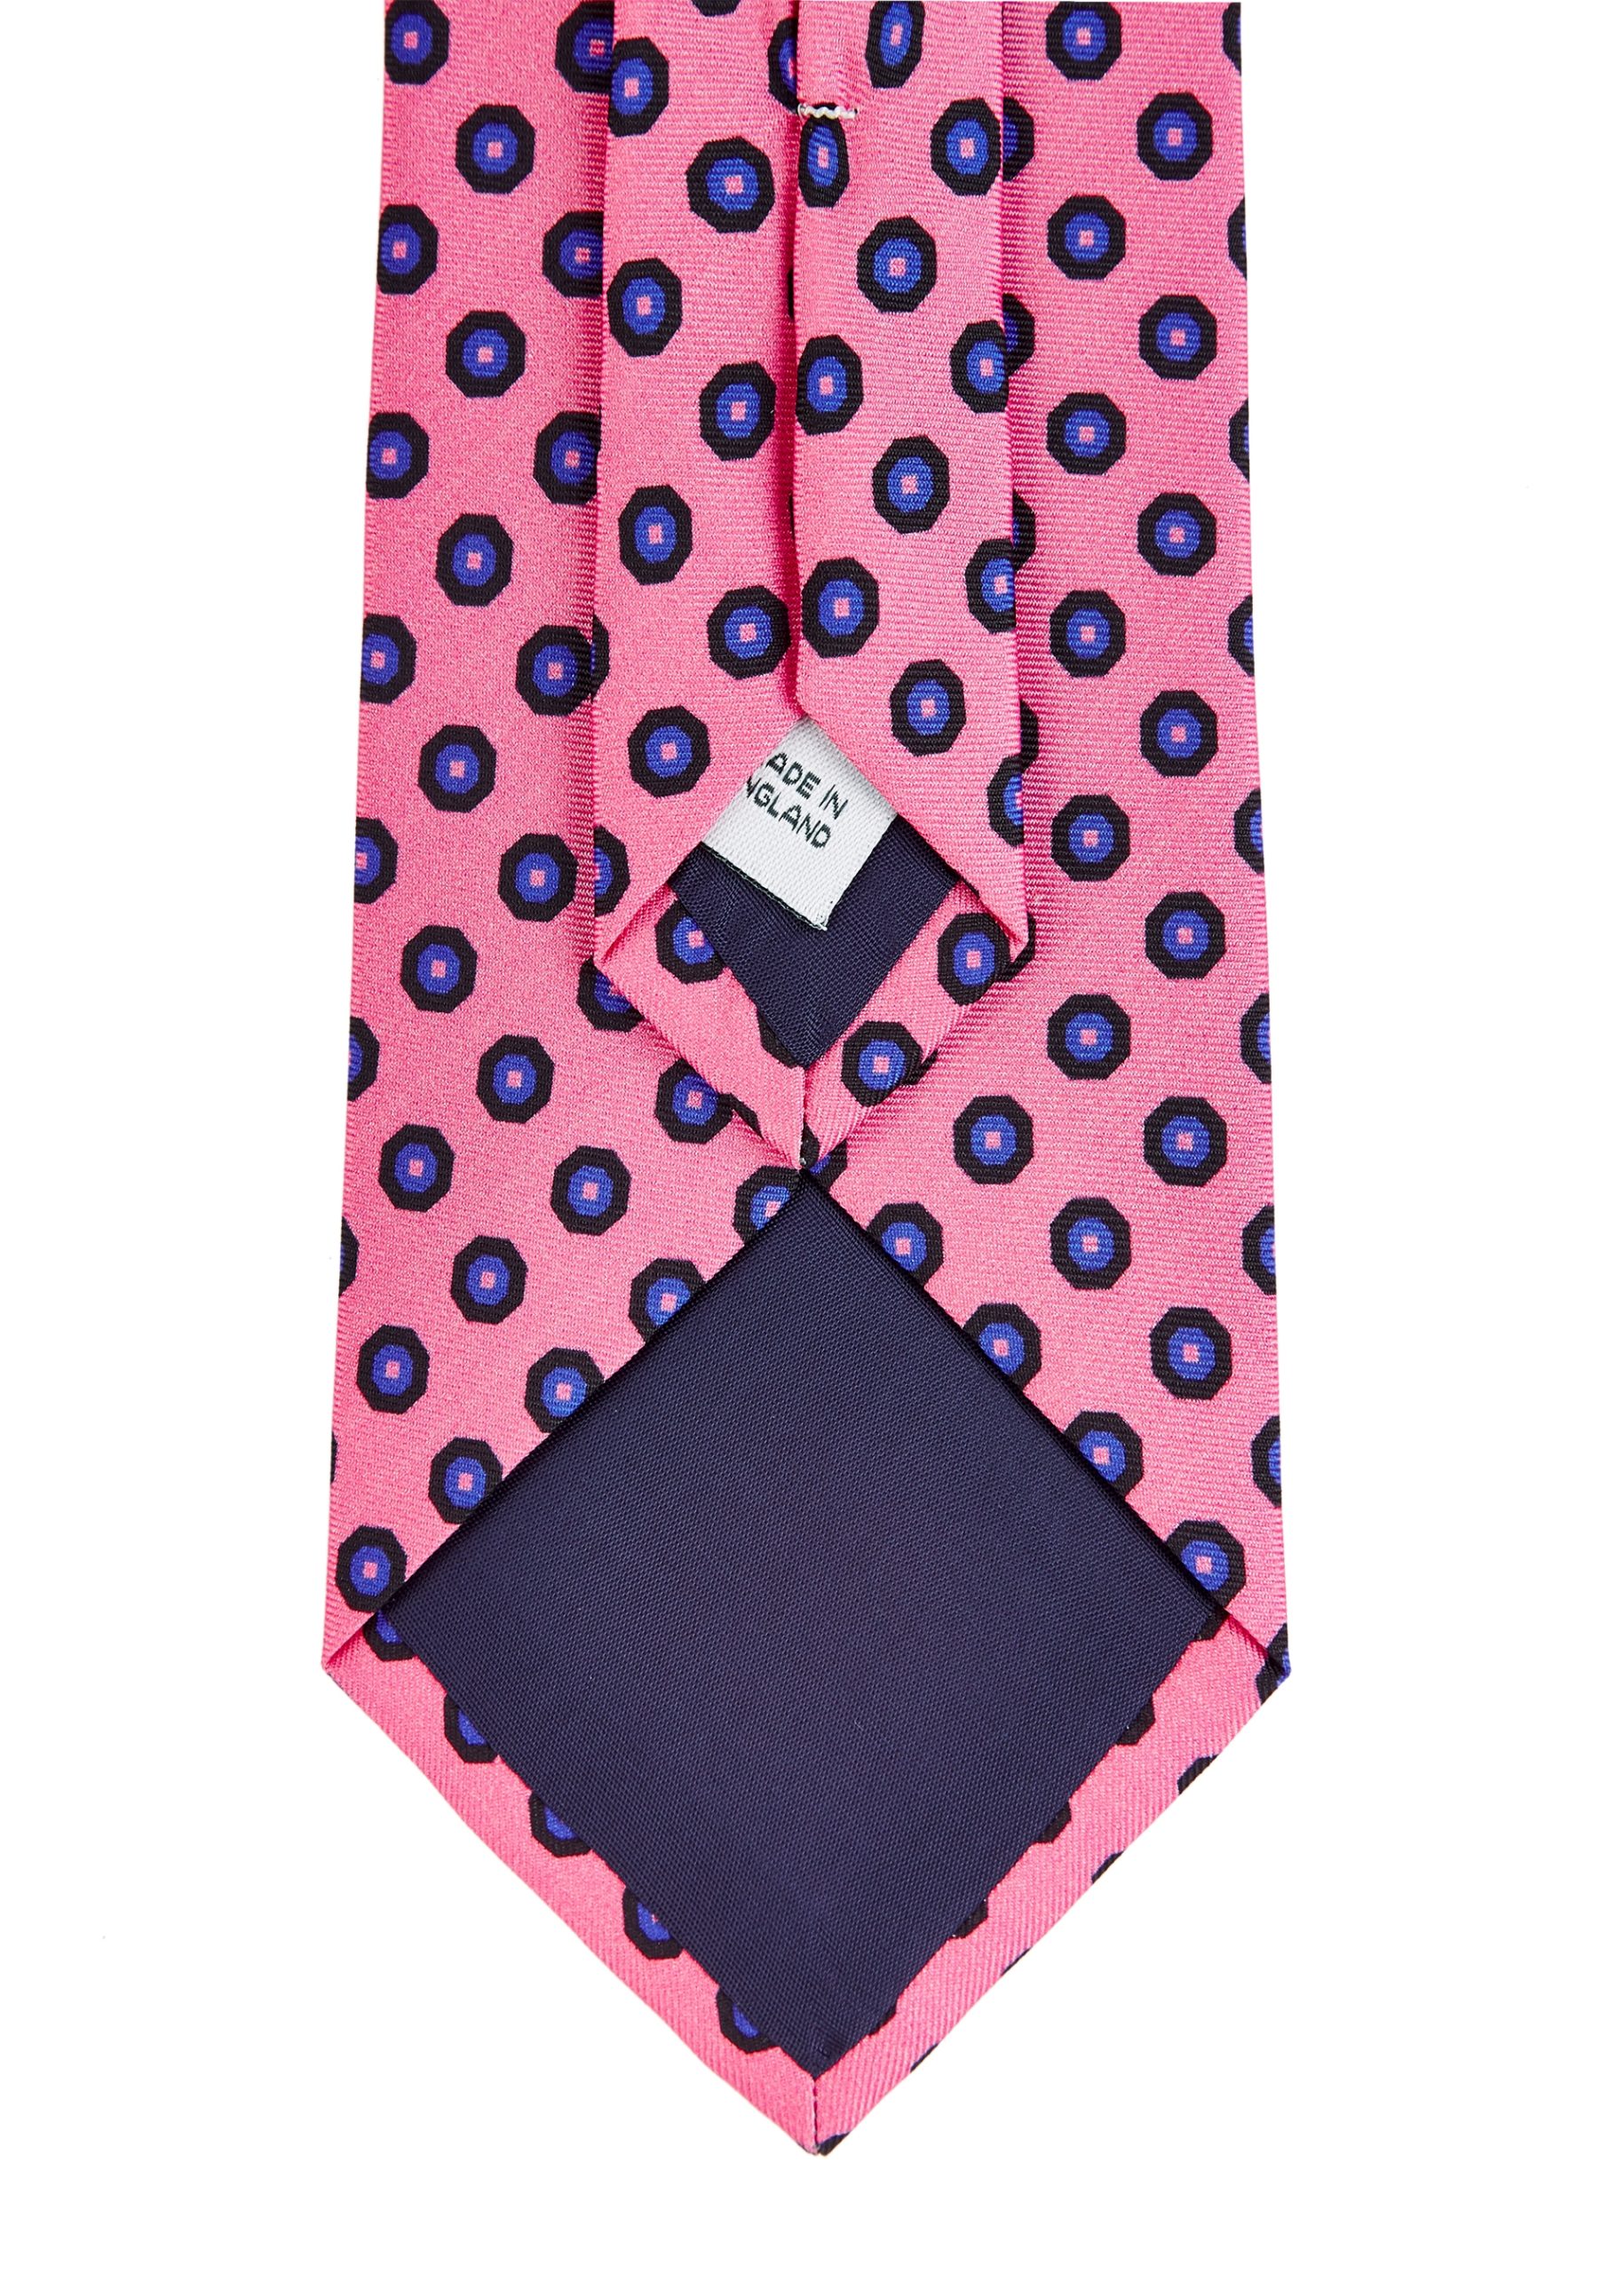 Roderick Charles hexagonal pink silk tie.